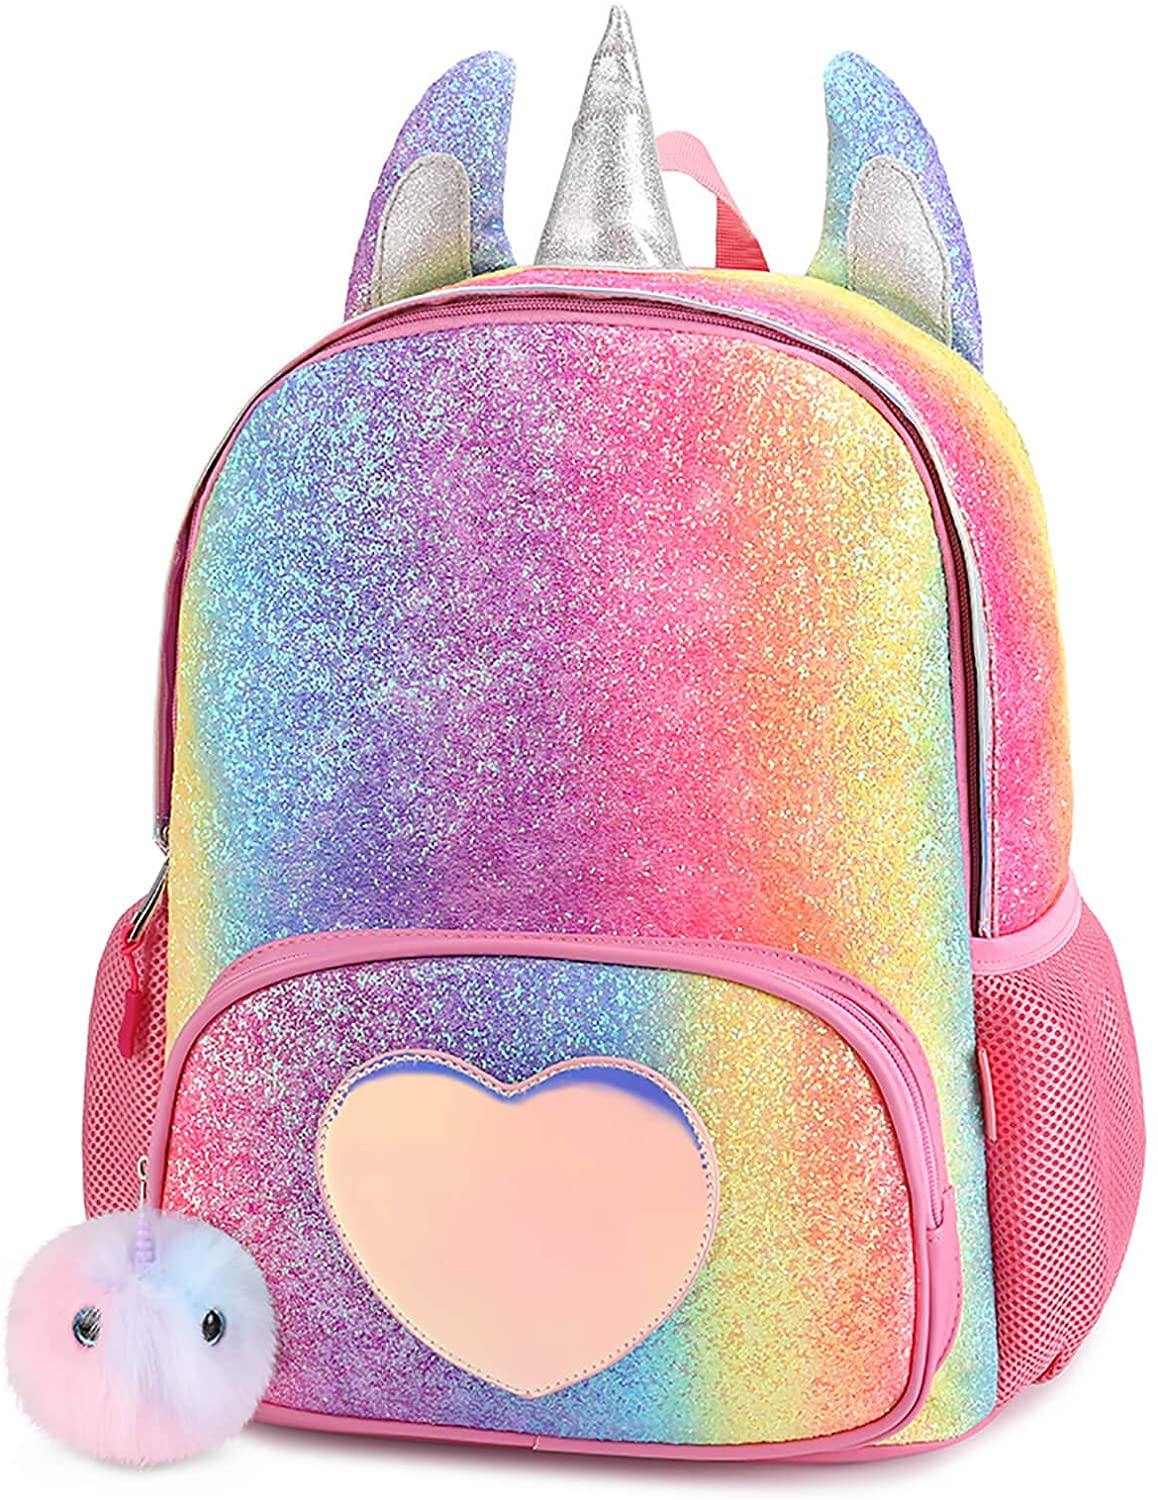 Shining Unicorn schoolbag Mibasies Rainbow 